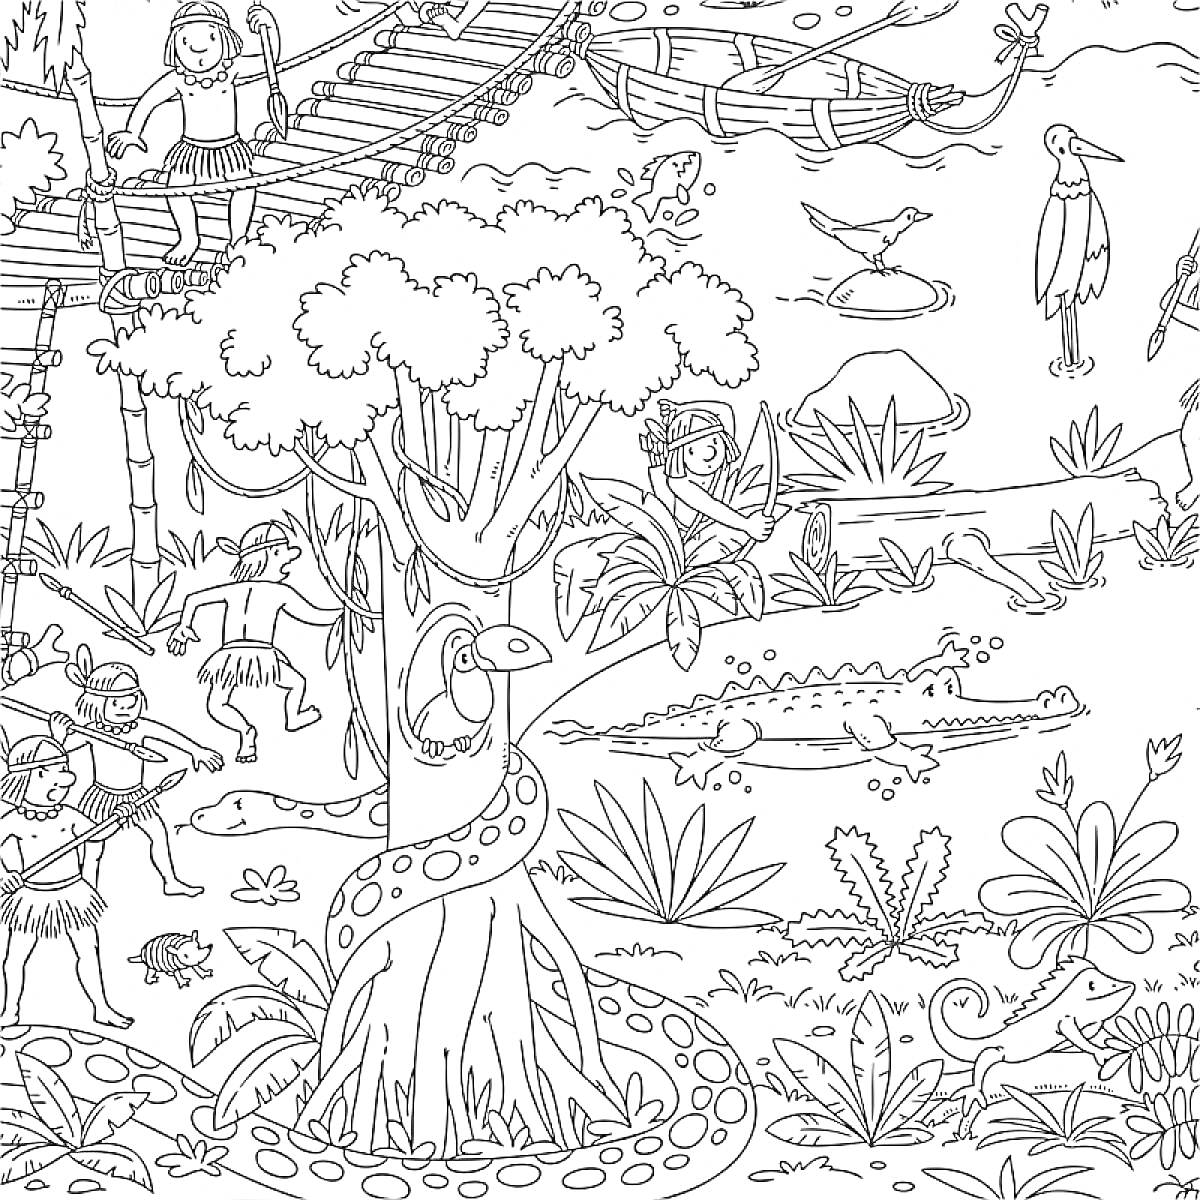 На раскраске изображено: Джунгли, Змеи, Крокодил, Тукан, Трава, Птица, Деревья, Человек, Мост